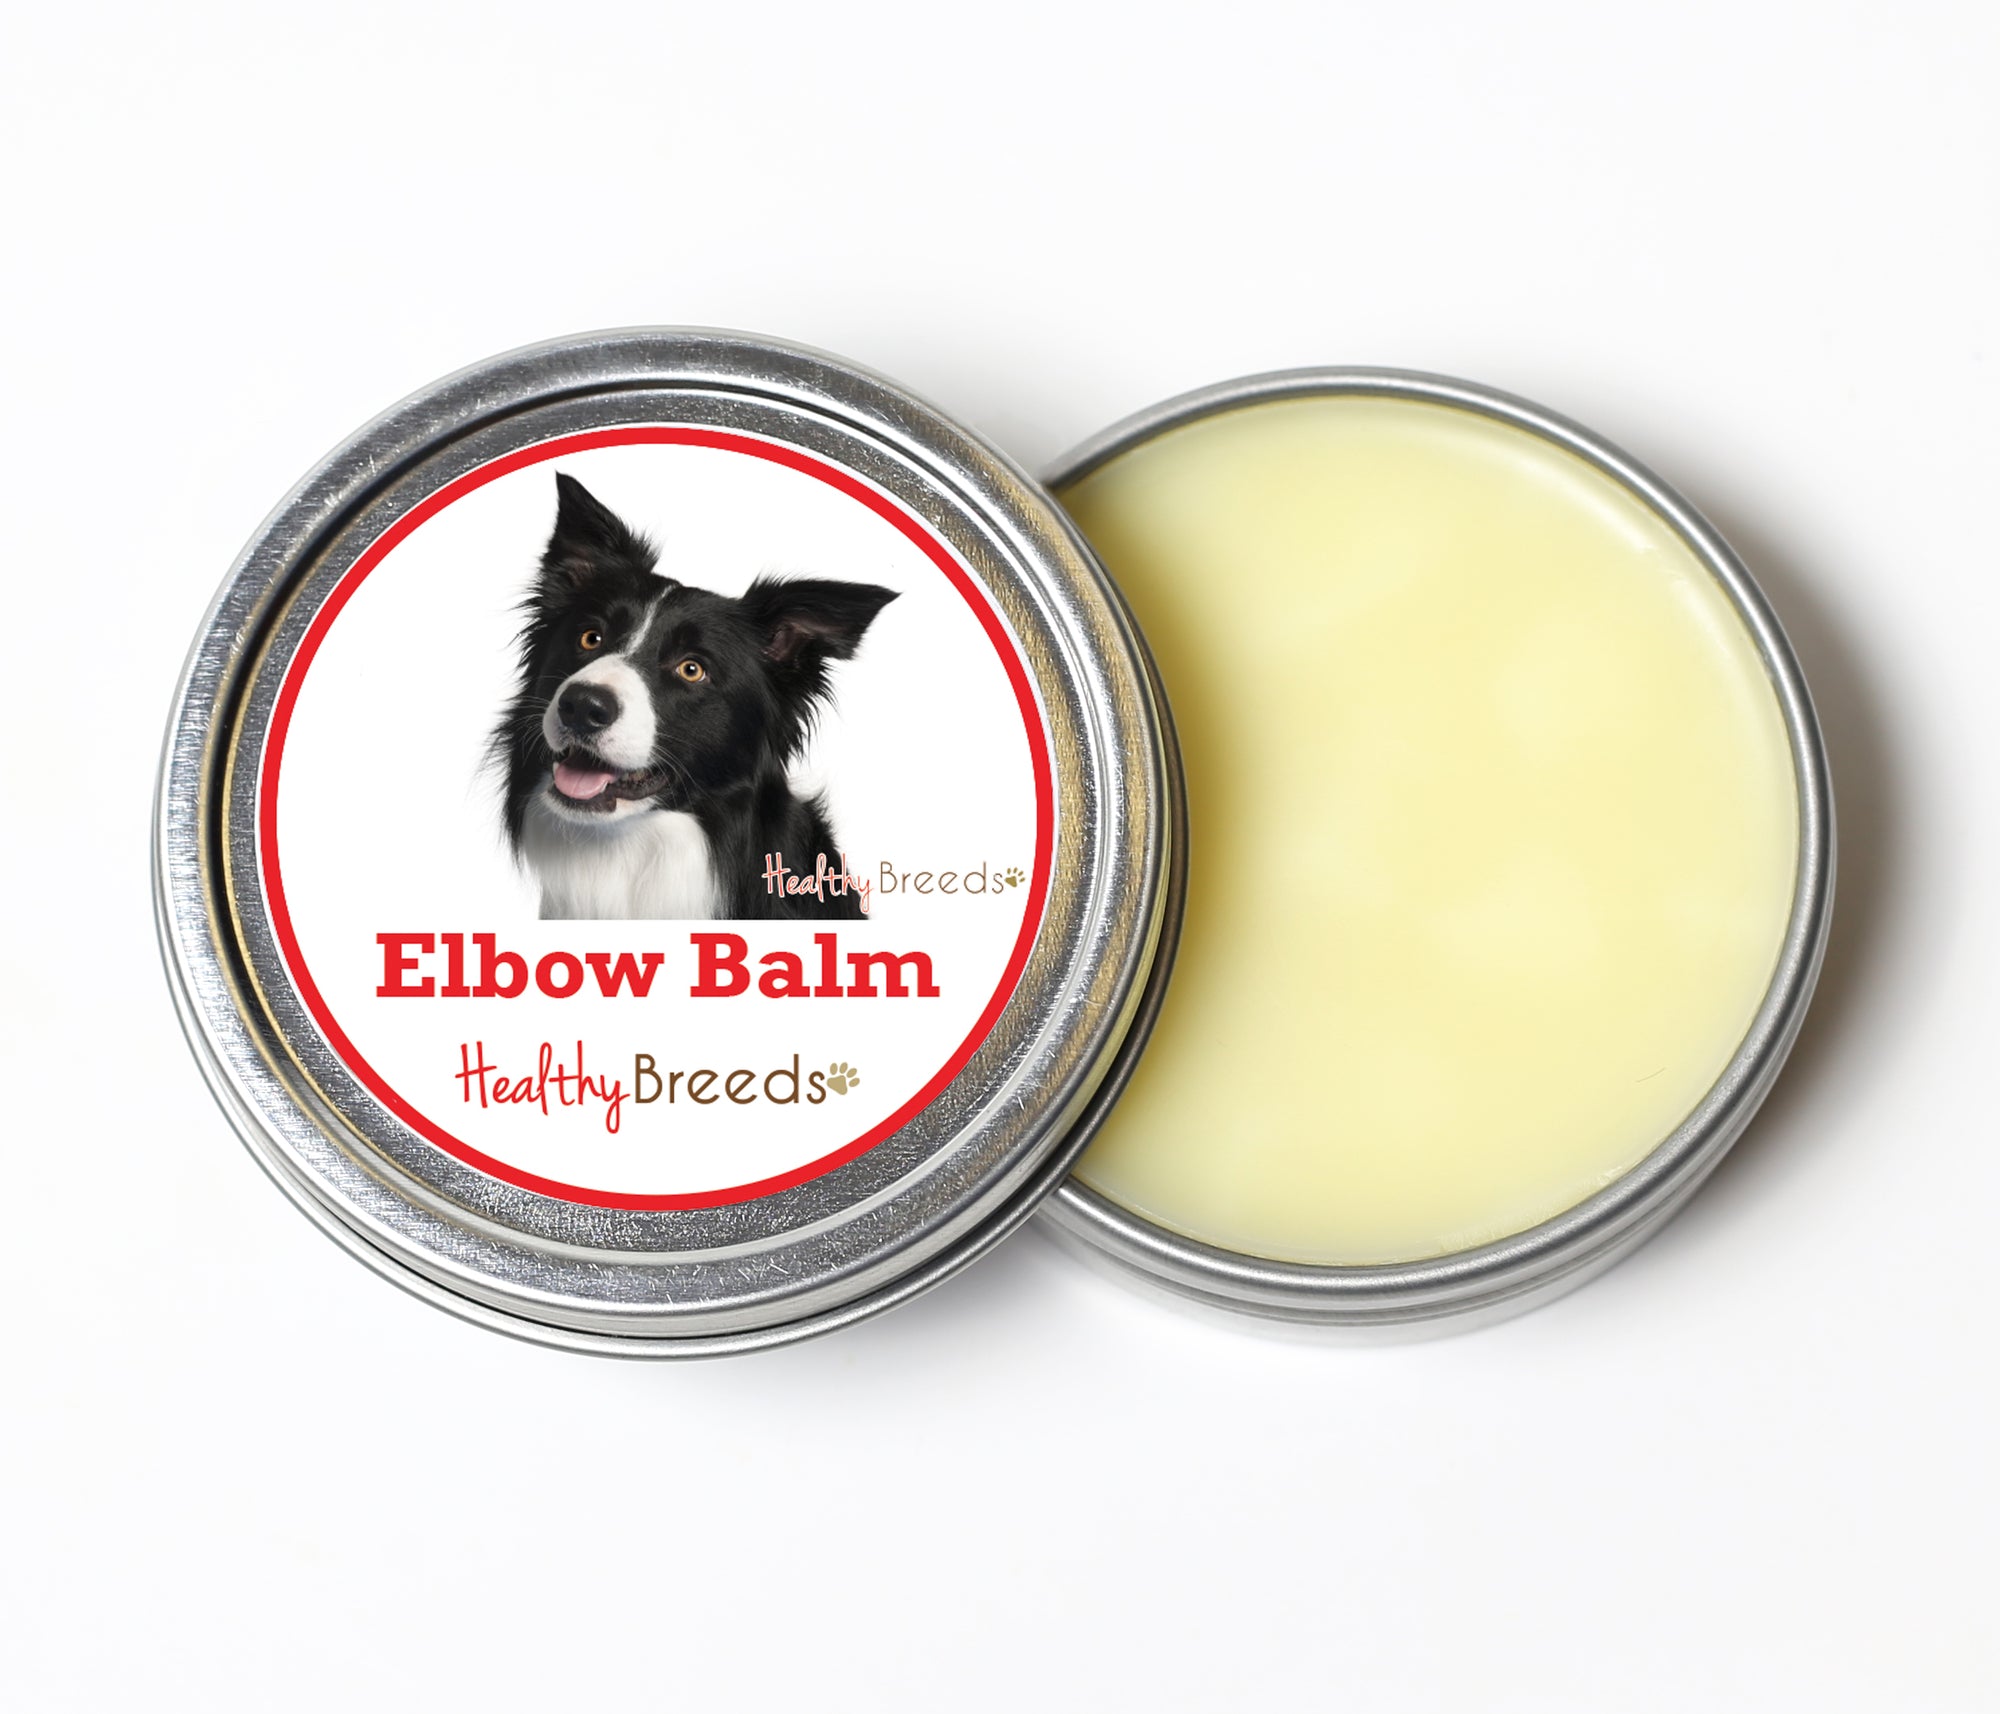 Healthy Breeds Border Collie Dog Elbow Balm 2 oz